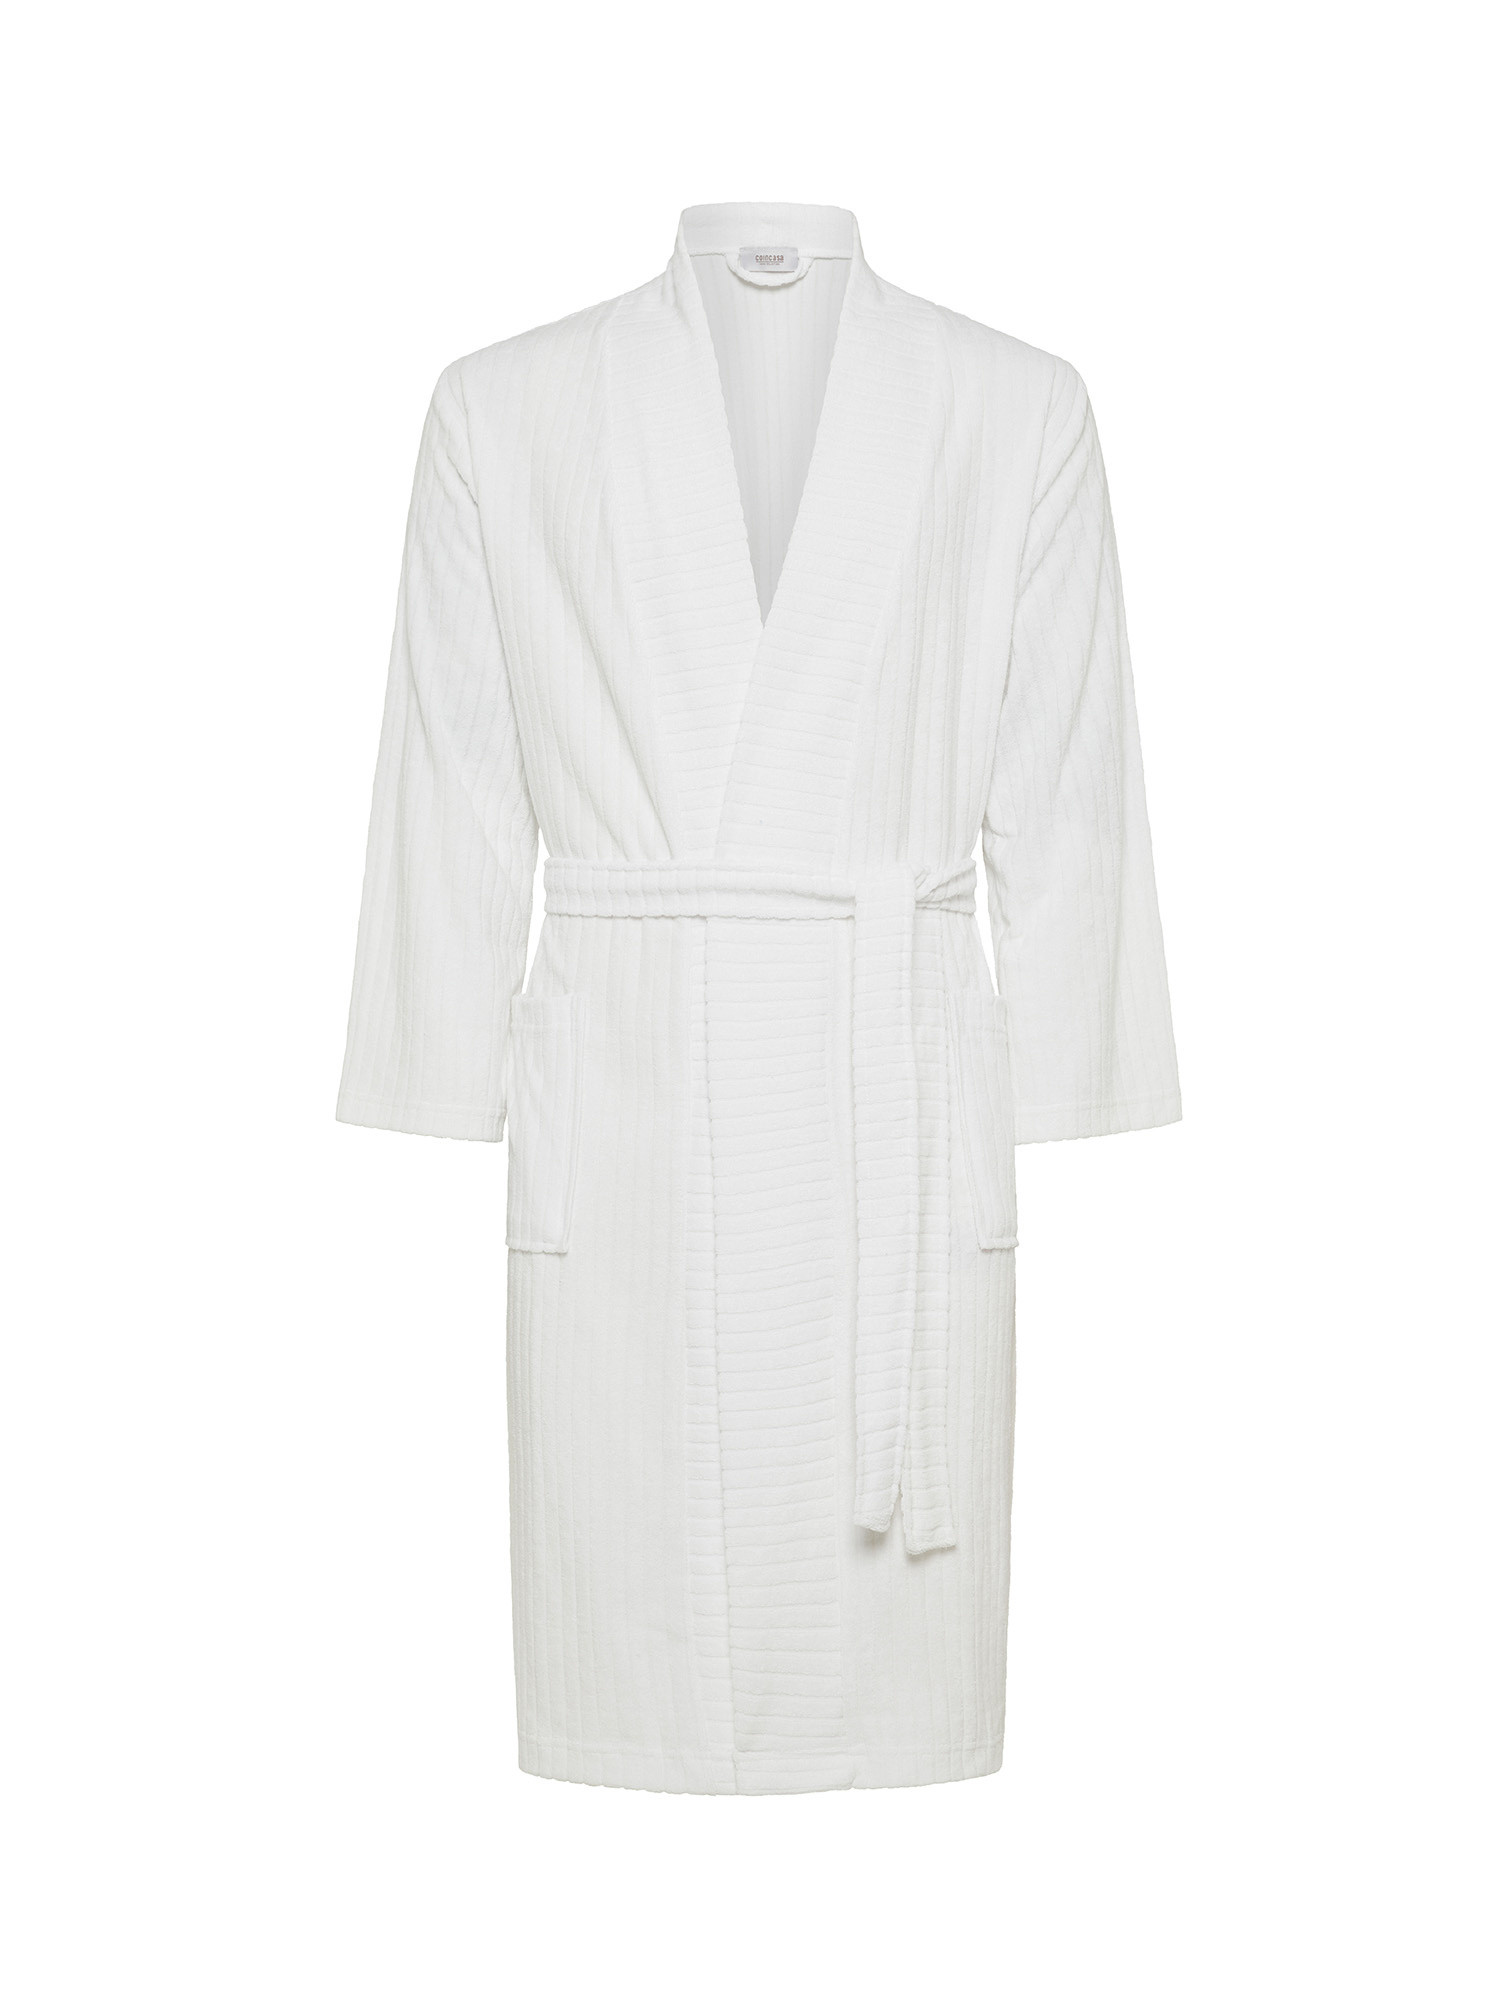 Knitted bathrobe, White, large image number 0